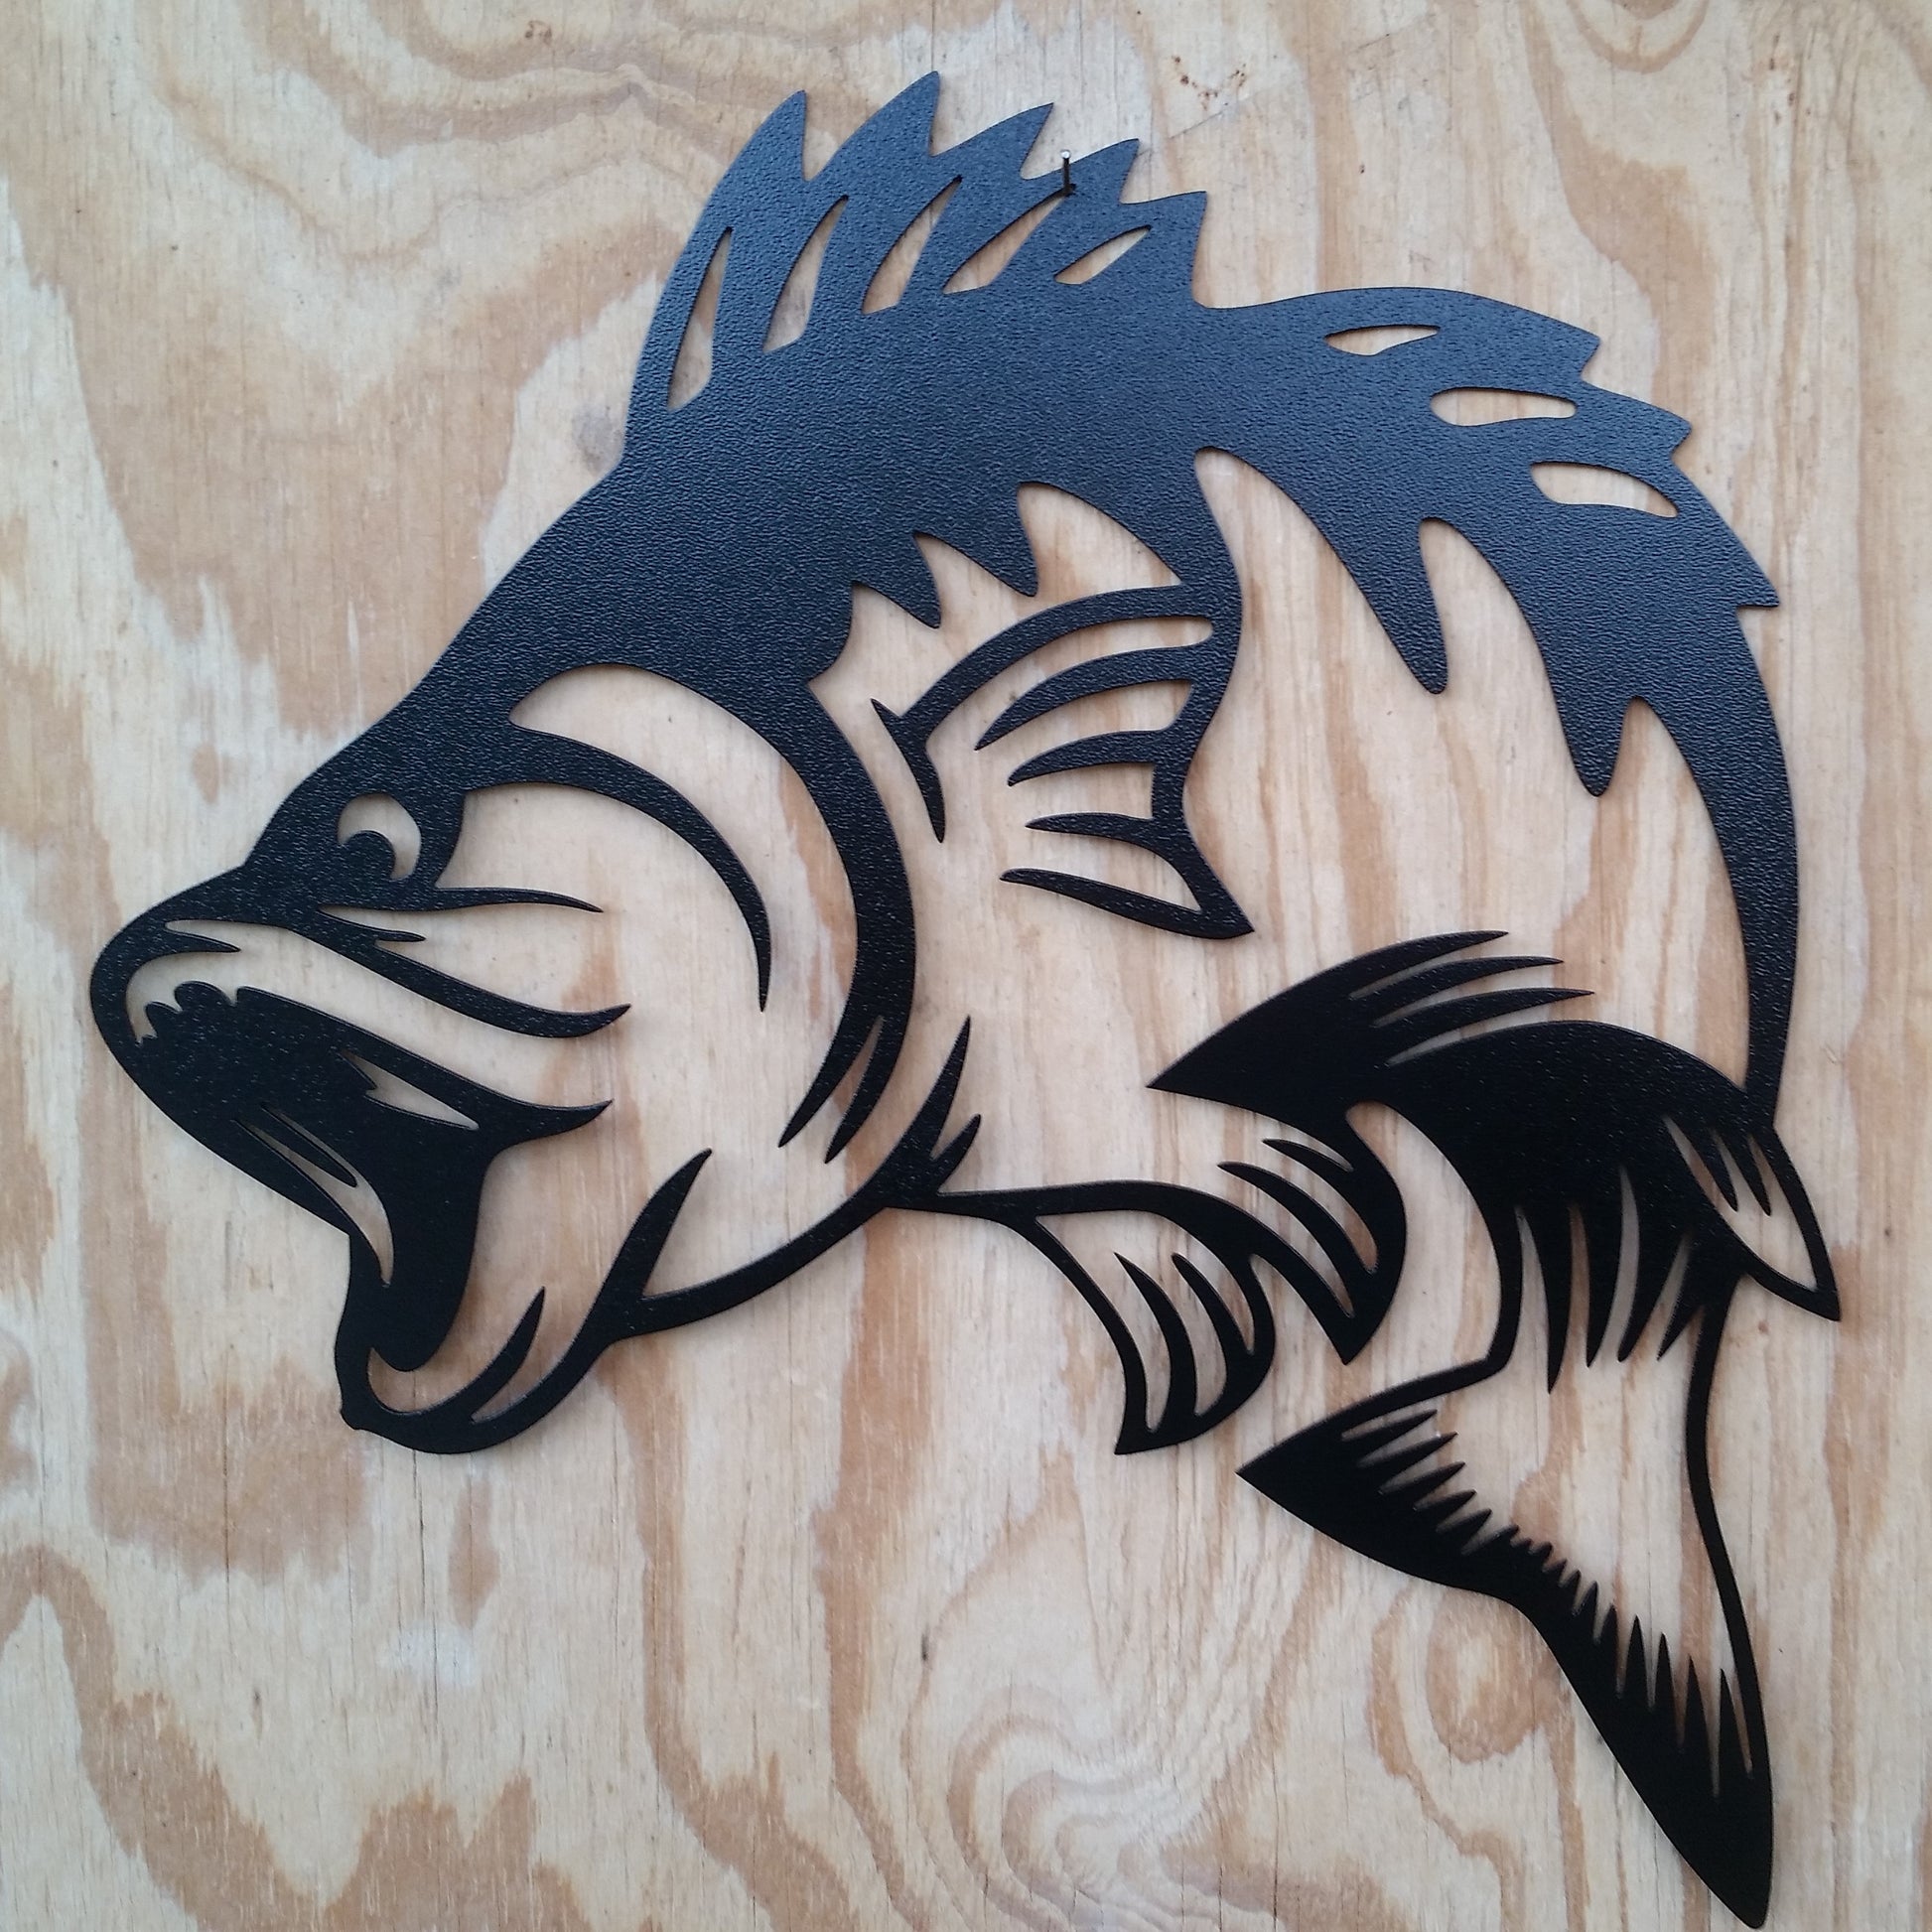 Bass Fish Metal Wall Art Decor Jumping